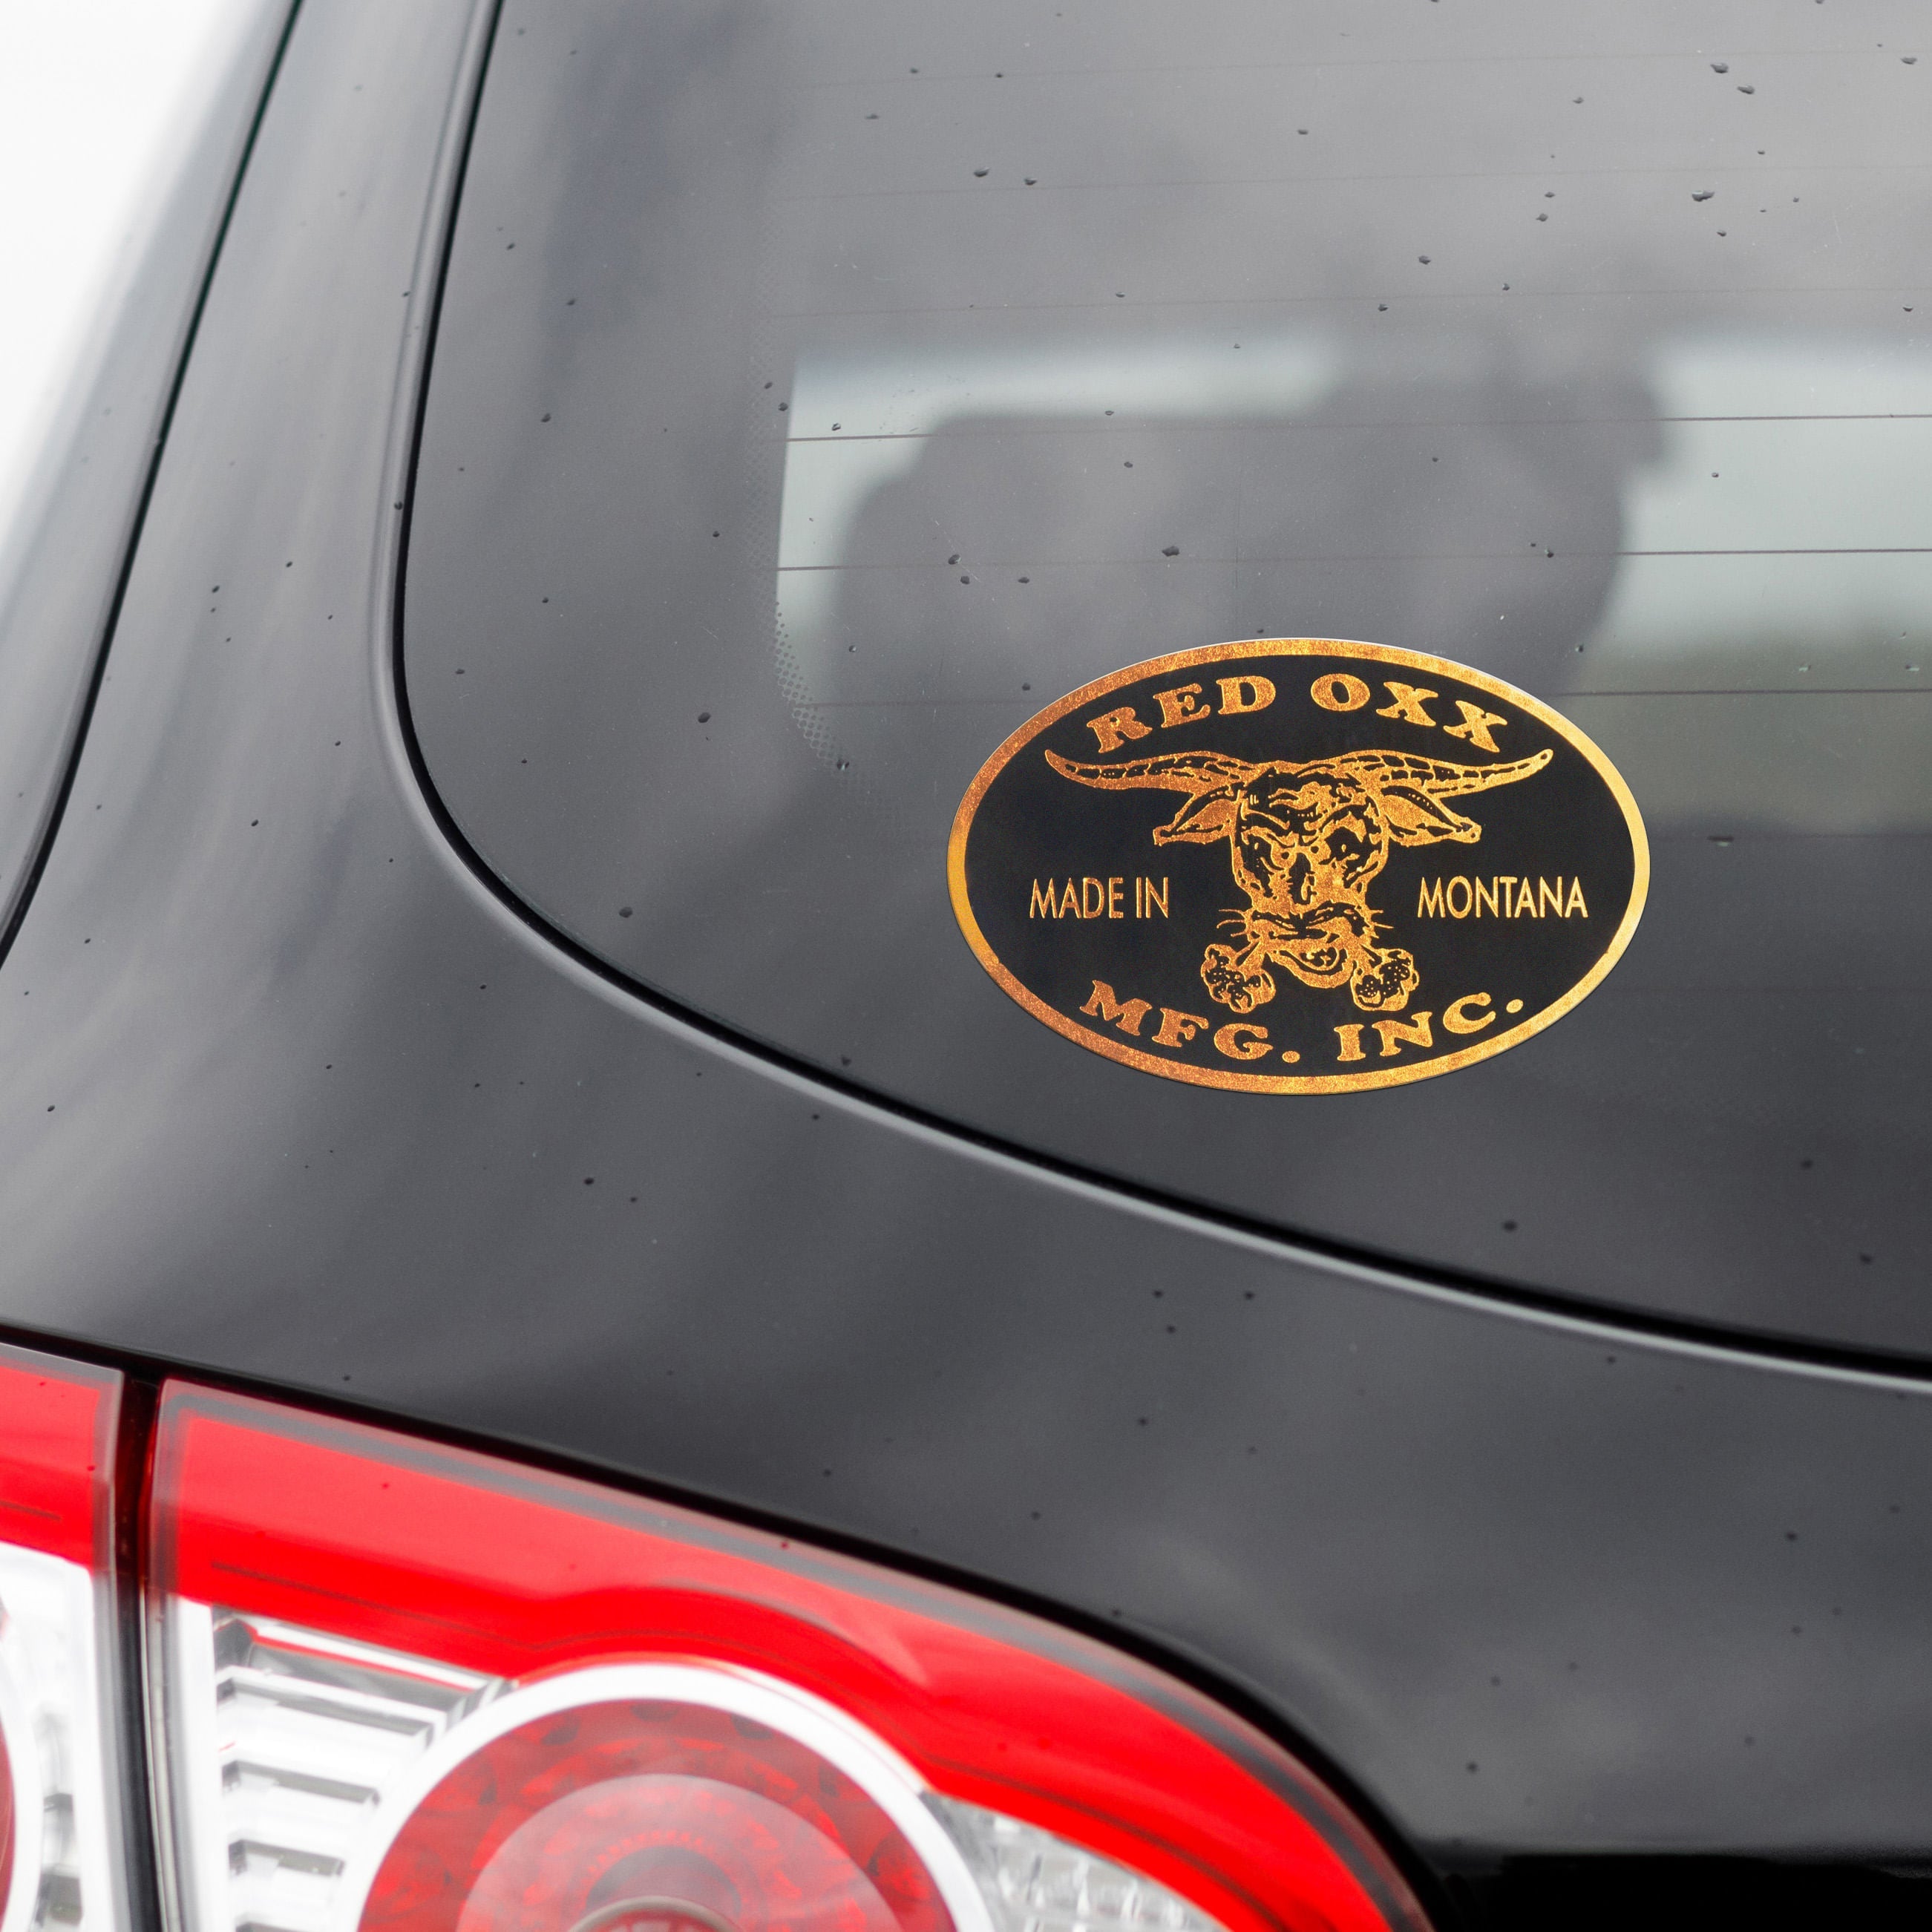 Bronze Red Oxx sticker on a vehicle. 